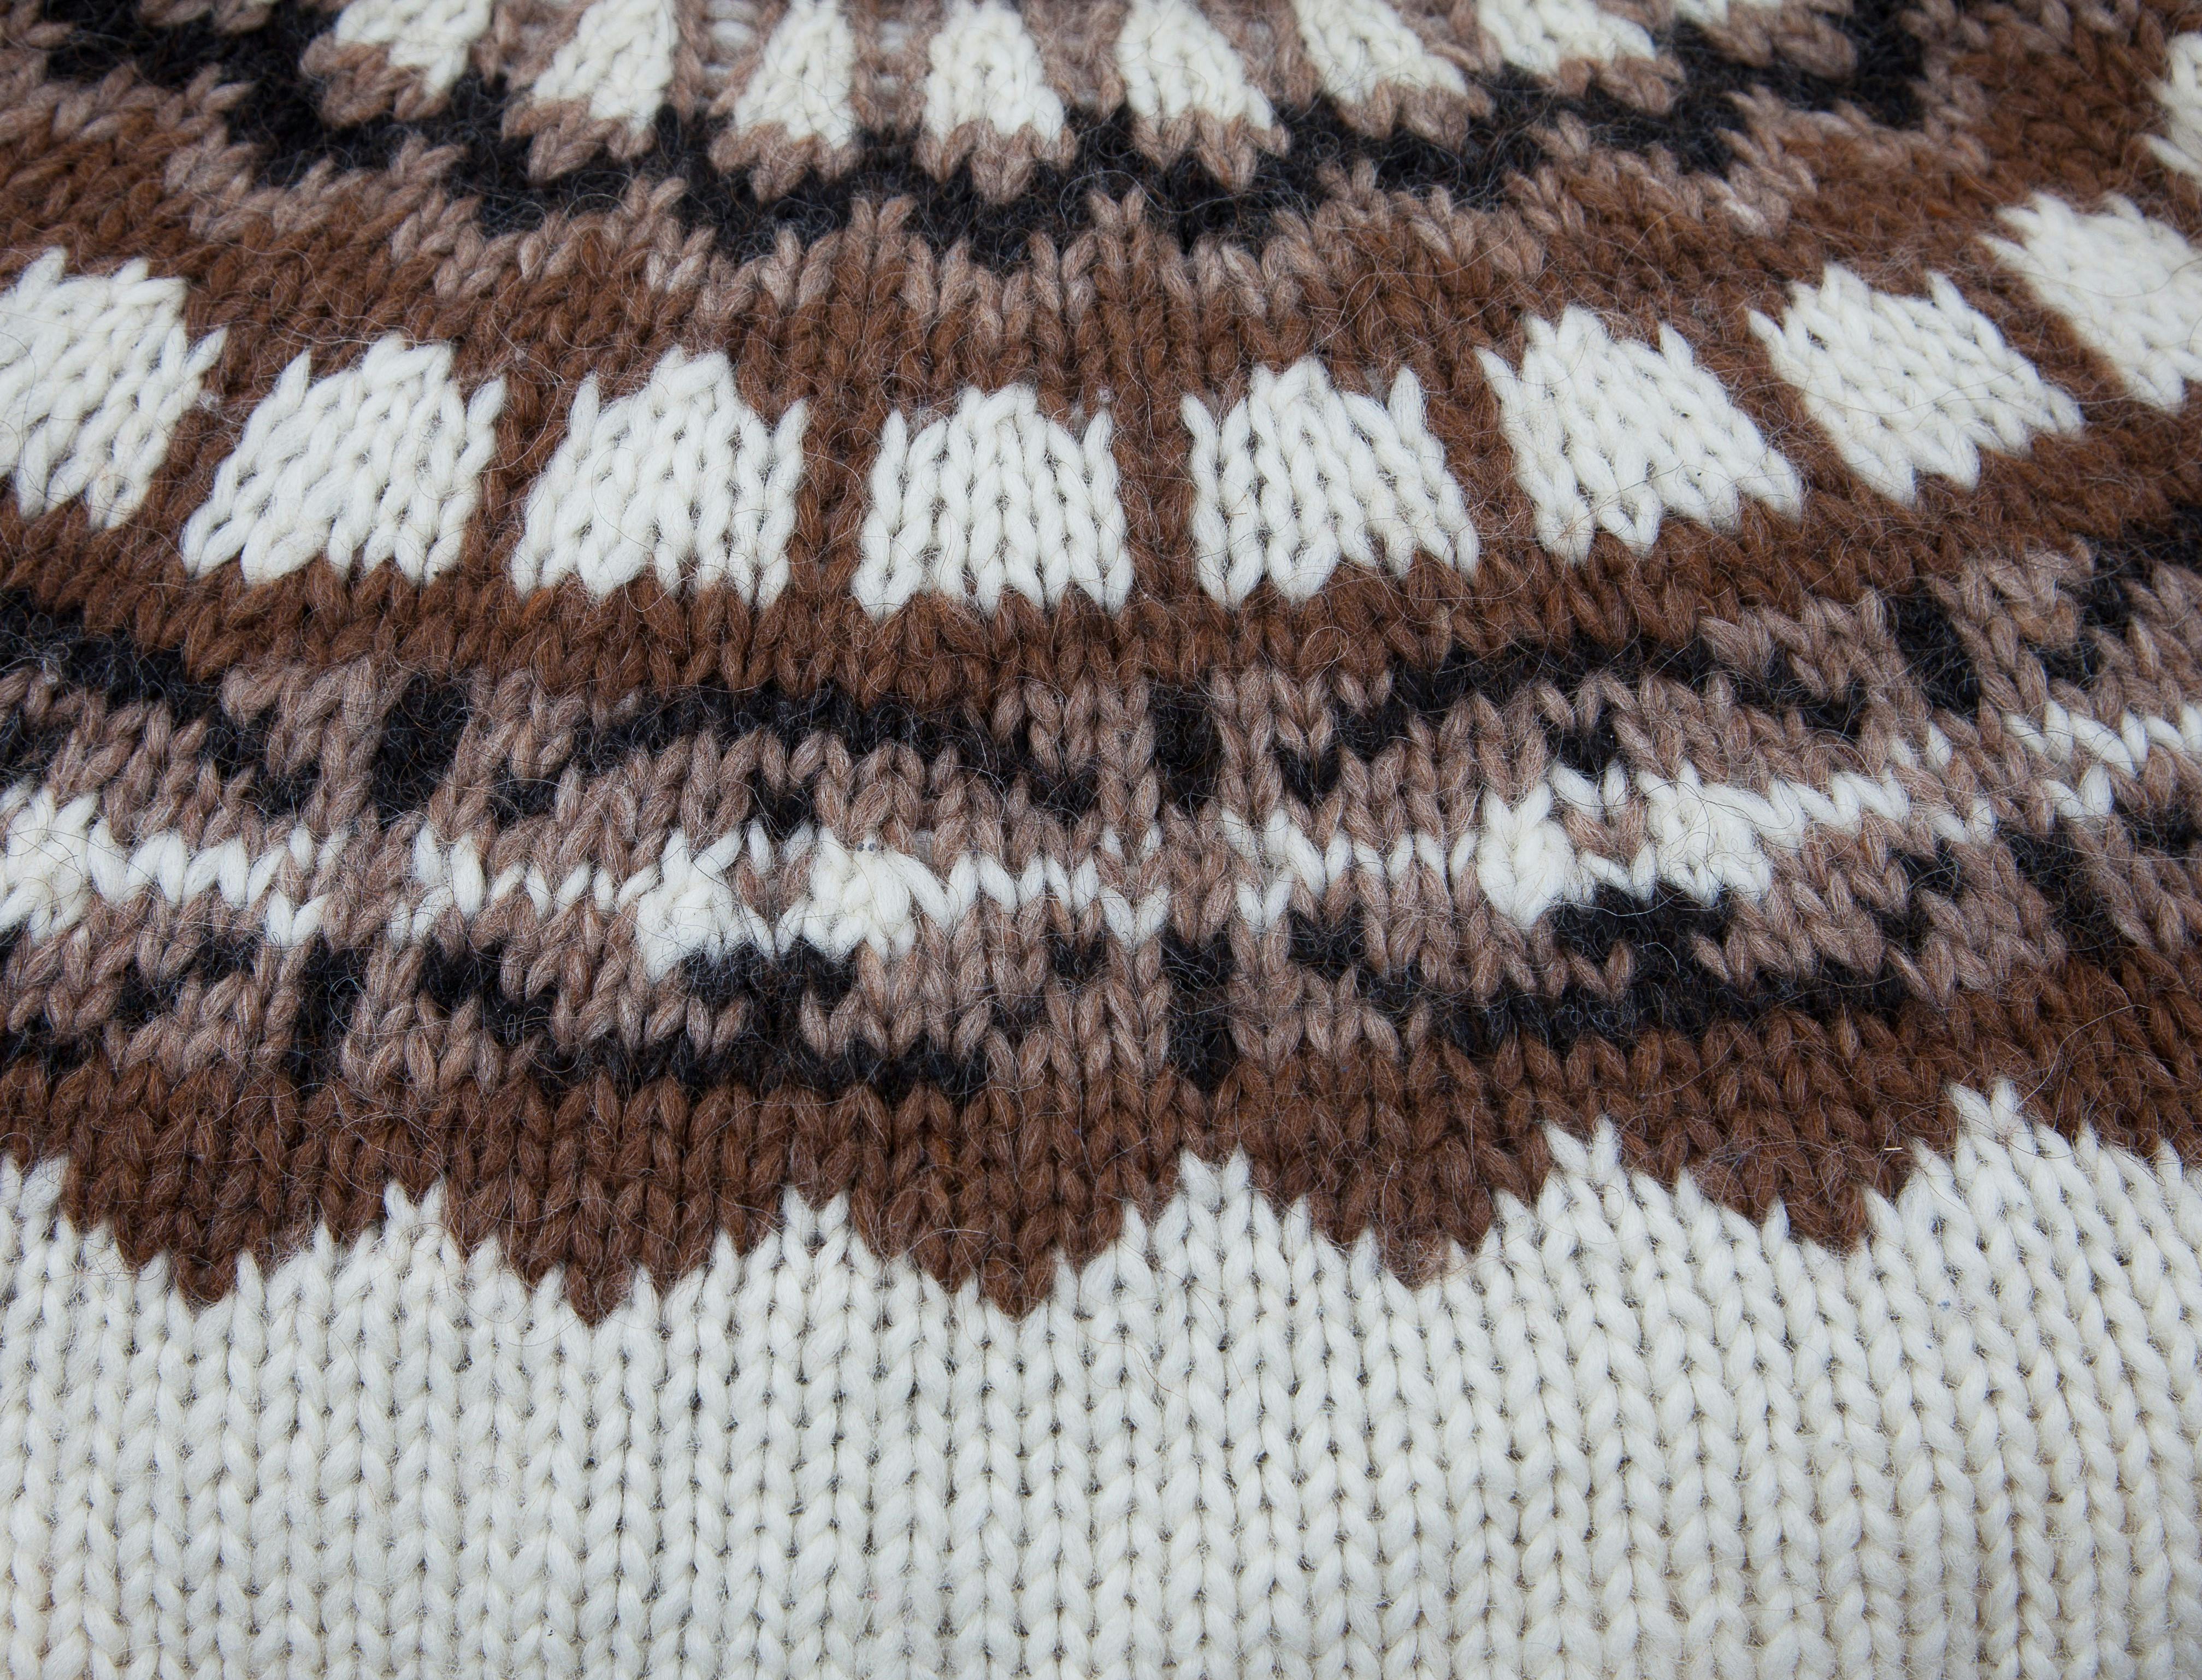 Icelandic sweater pattern close-up